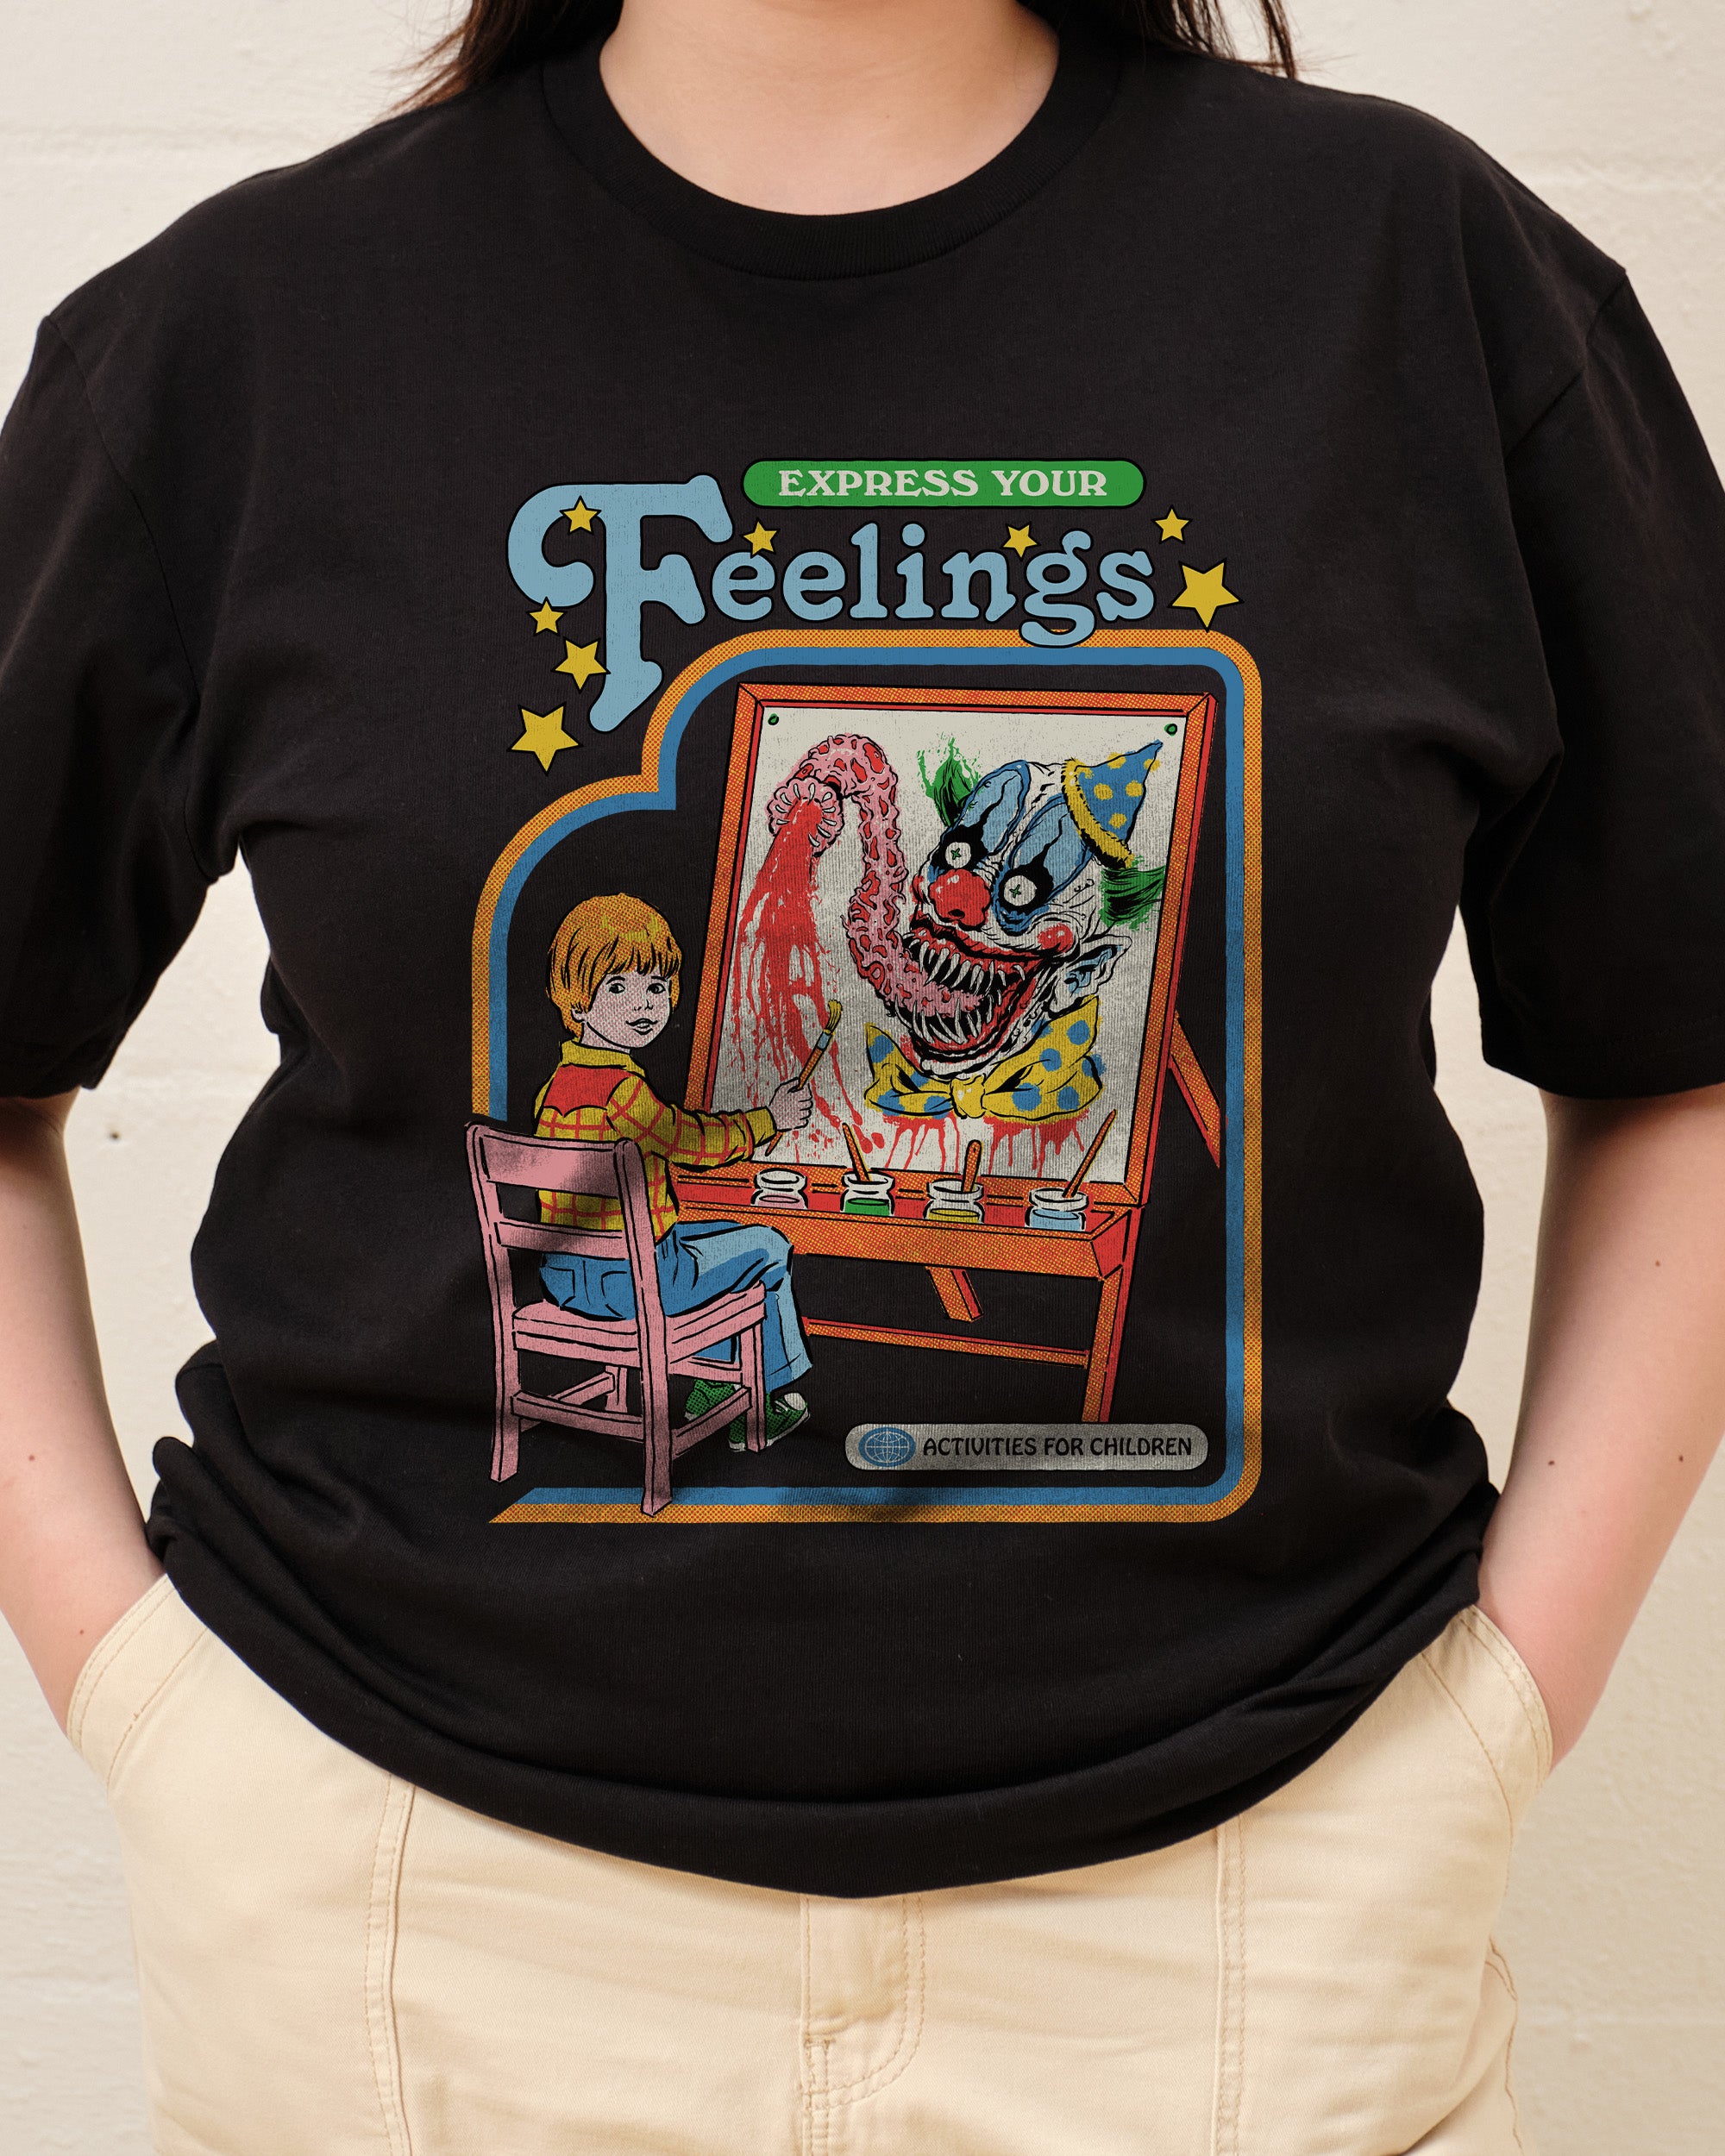 Express Your Feelings T-Shirt